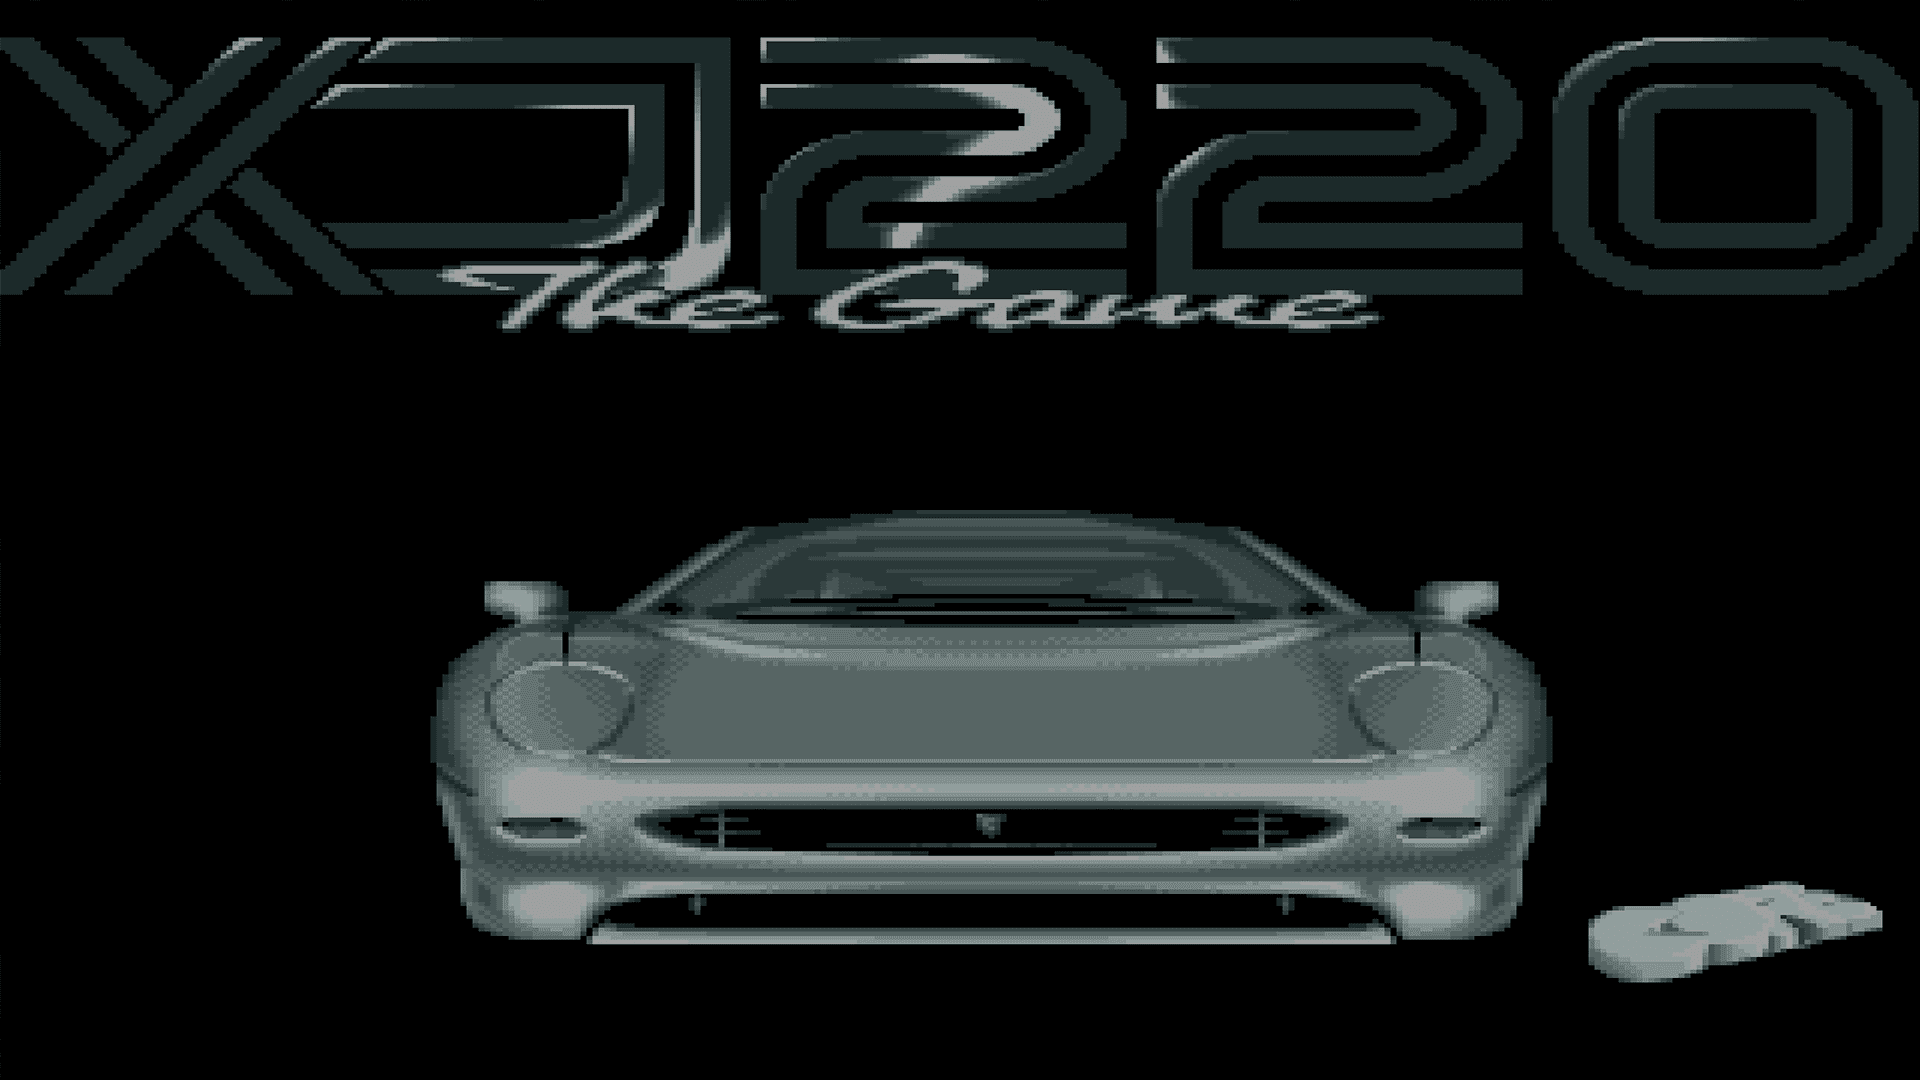 Jaguar XJ220: the Amiga's essential racer?